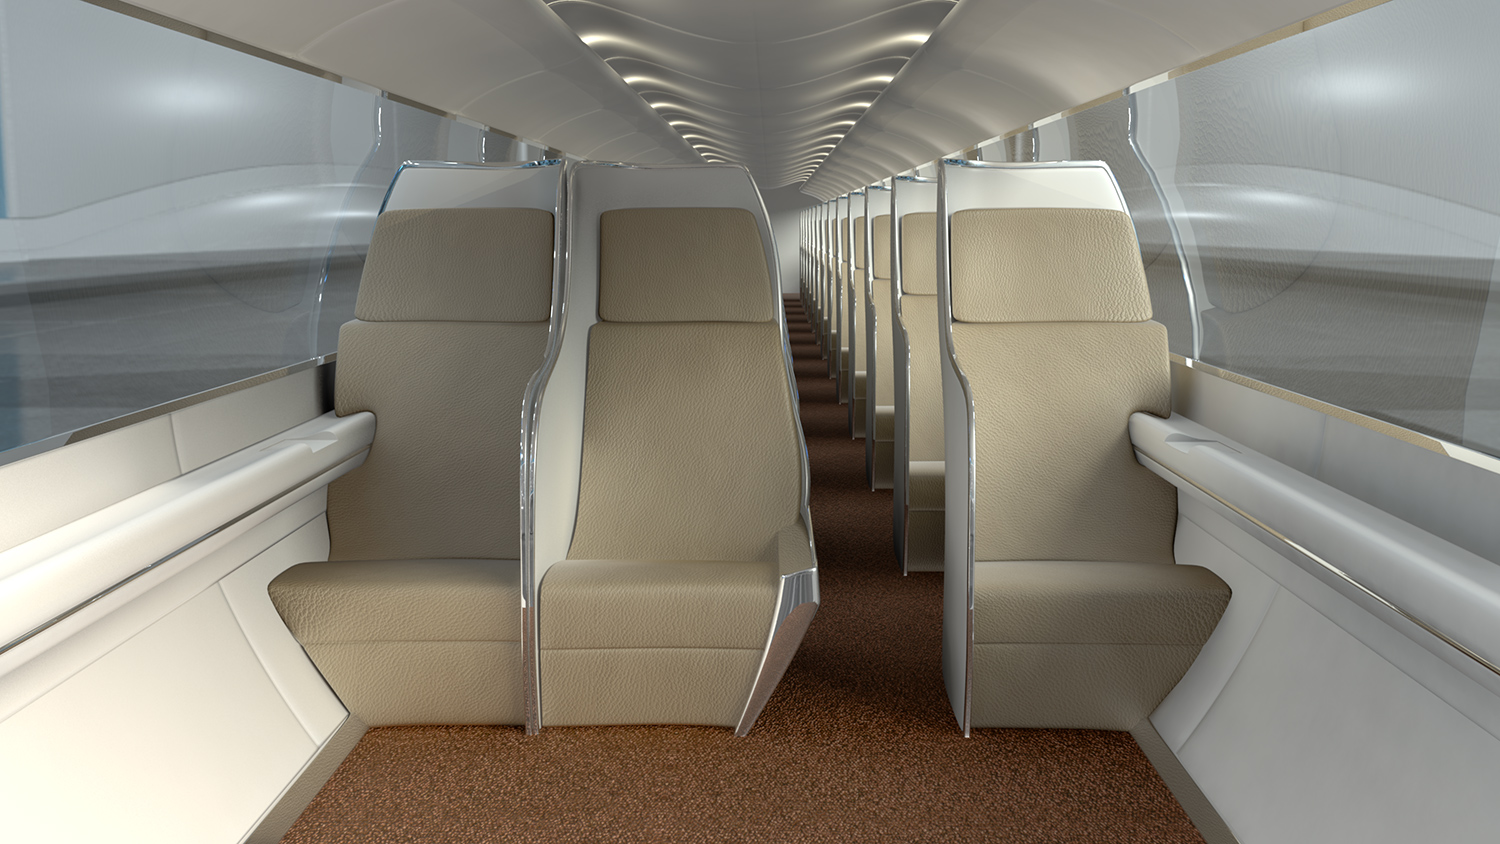 hyperloop transportation technologies bibop gresta coo interior01 cam01